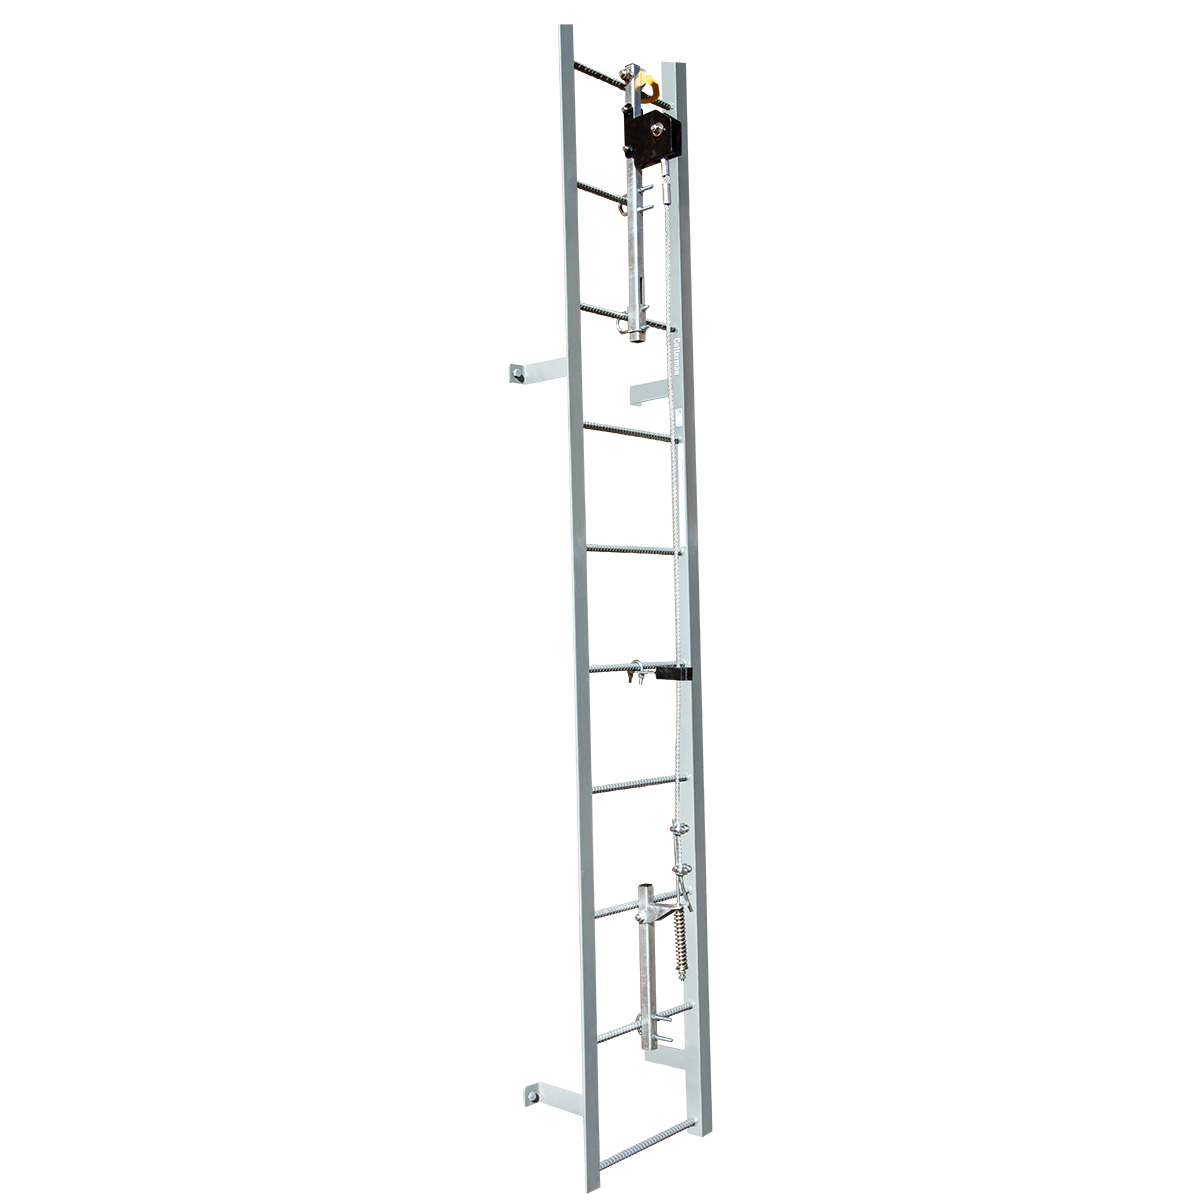 SafeWaze 70' VLL Cable Ladder System, 2-person Complete Kit